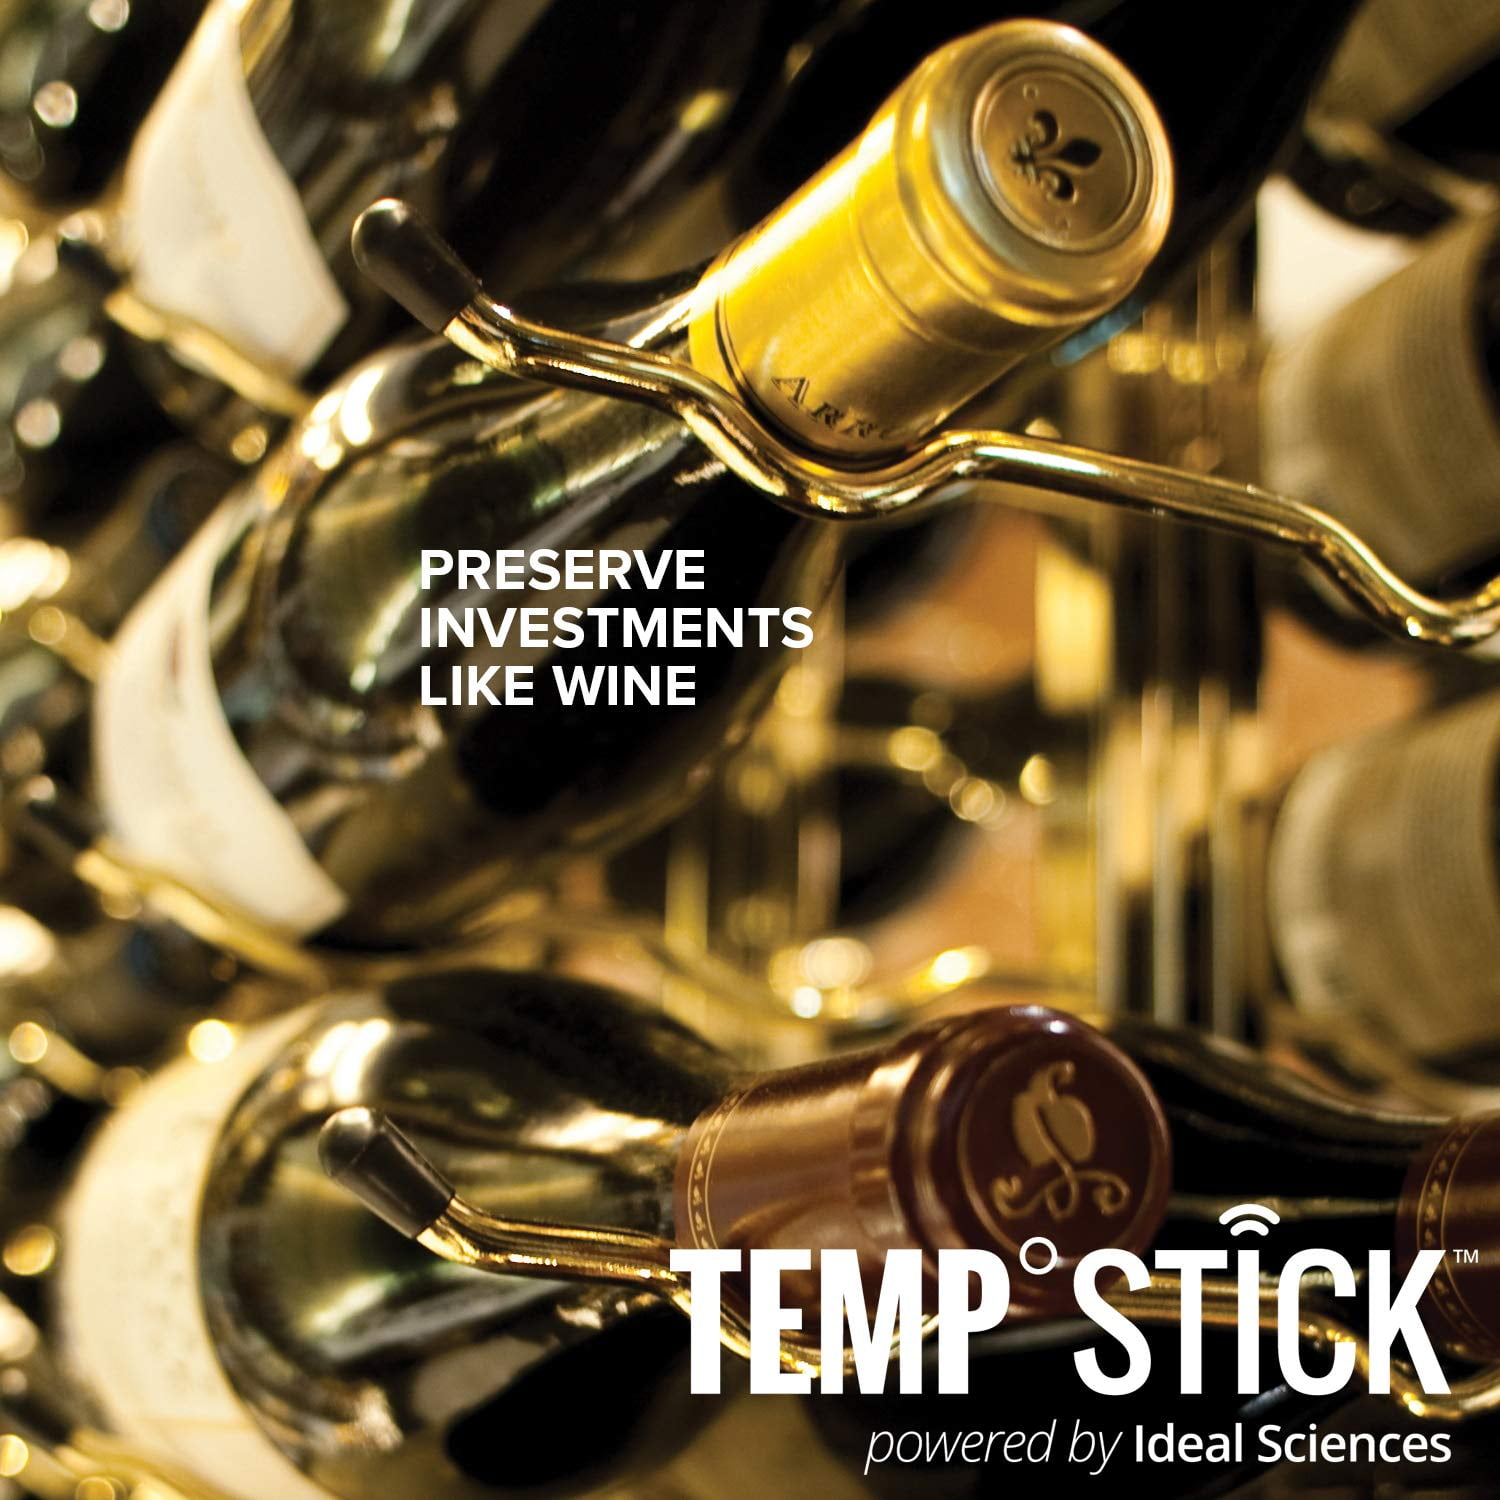 Temp Stick® WiFi Temperature & Humidity Sensor